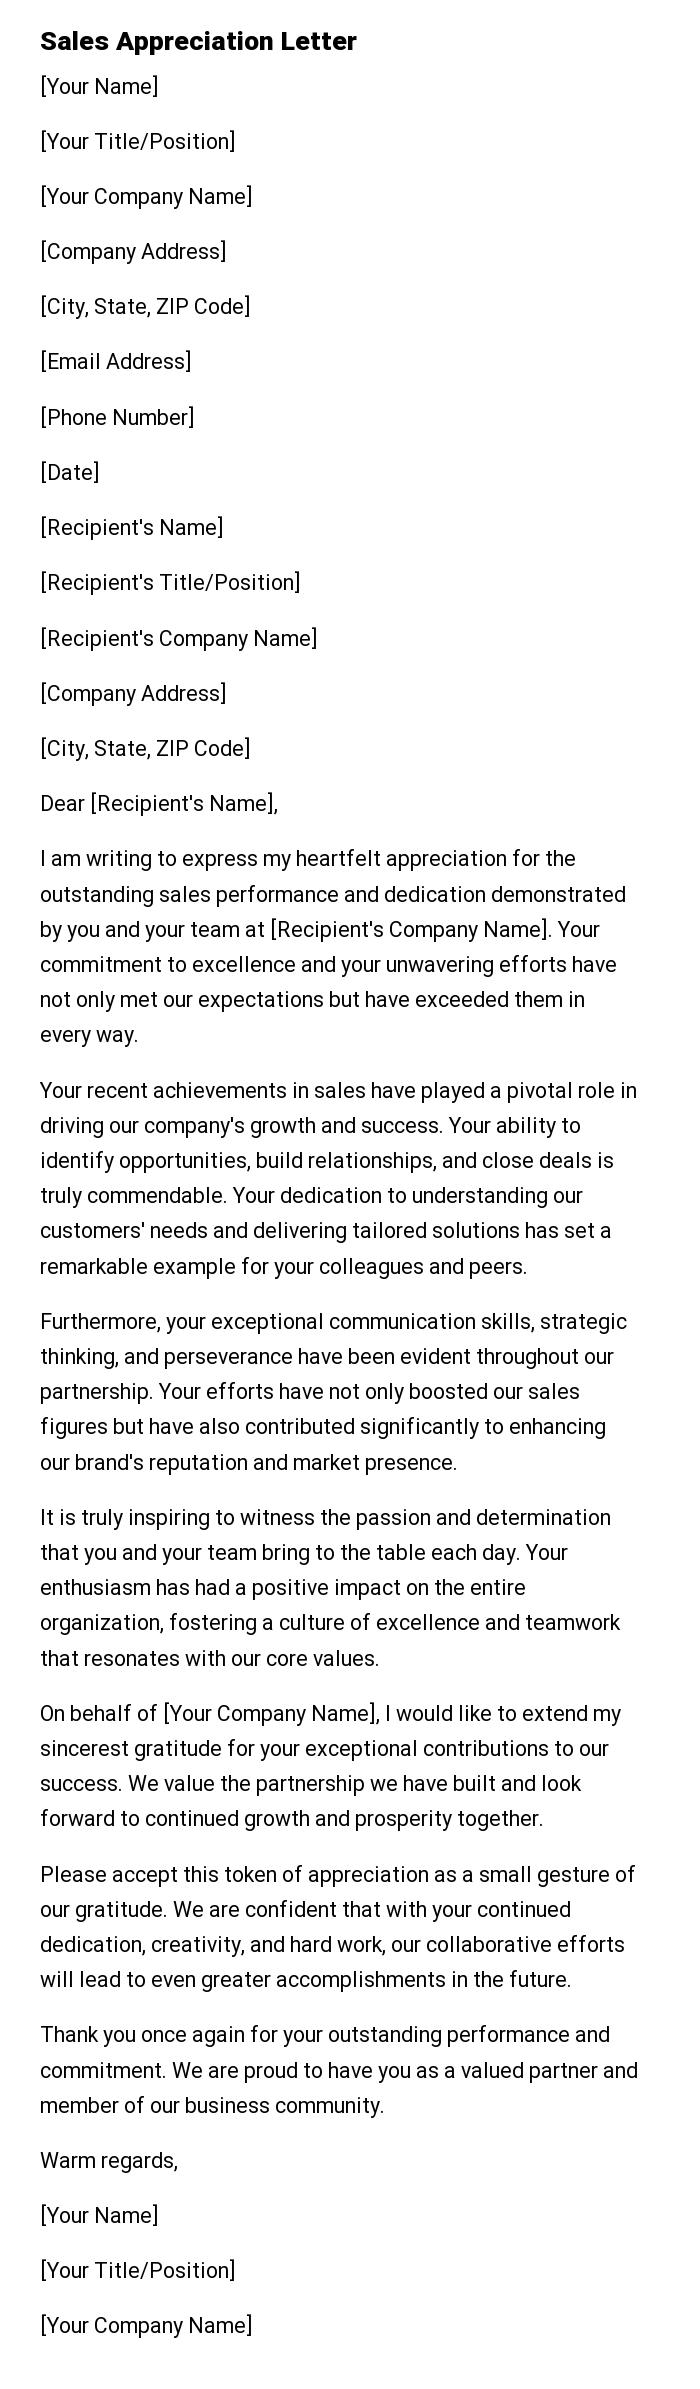 Sales Appreciation Letter